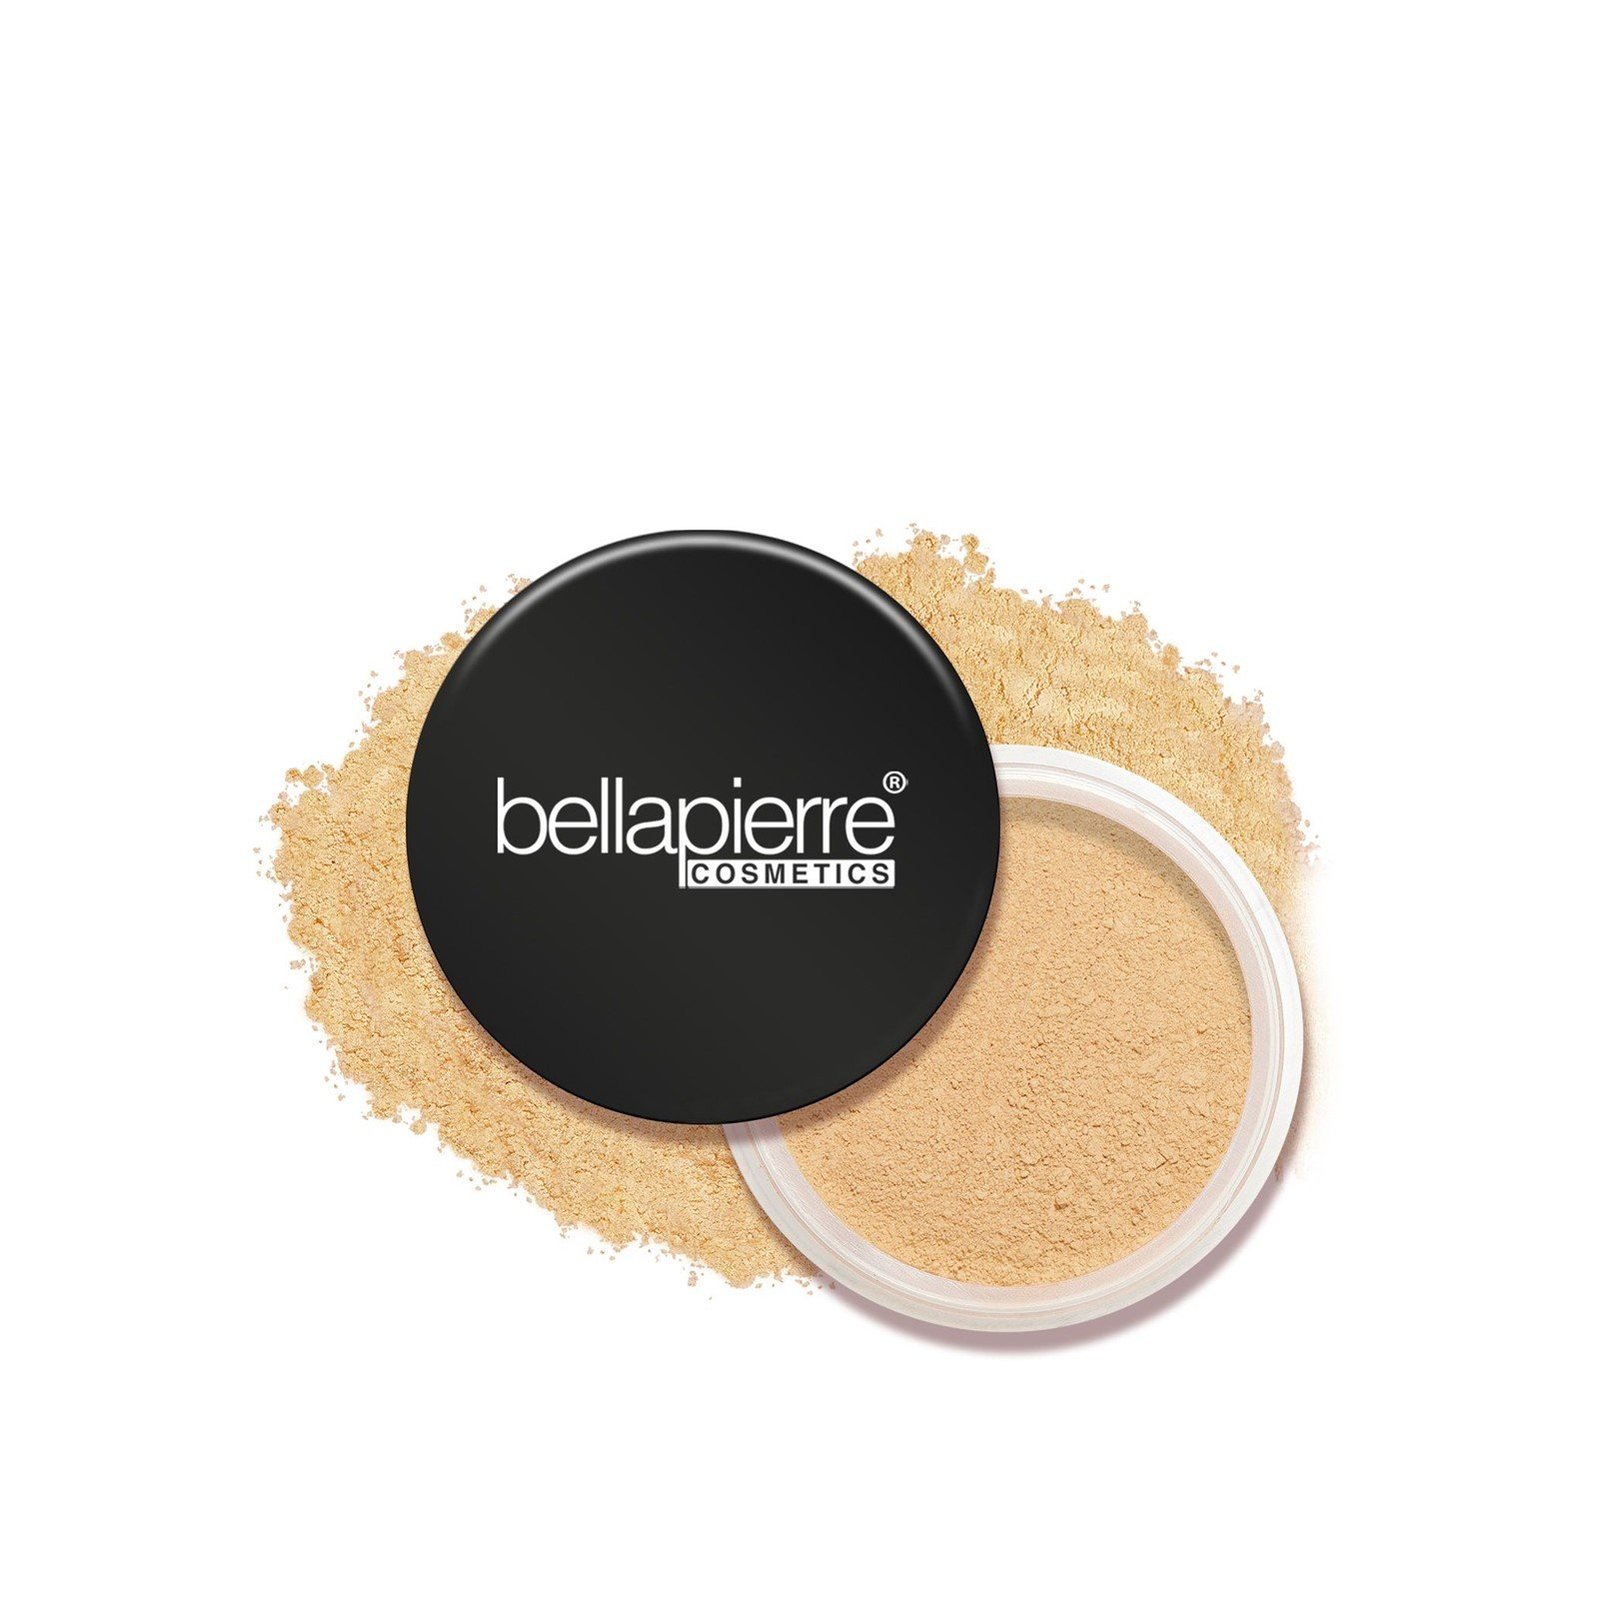 Bellapierre Cosmetics Mineral Foundation SPF15 Cinnamon 9g